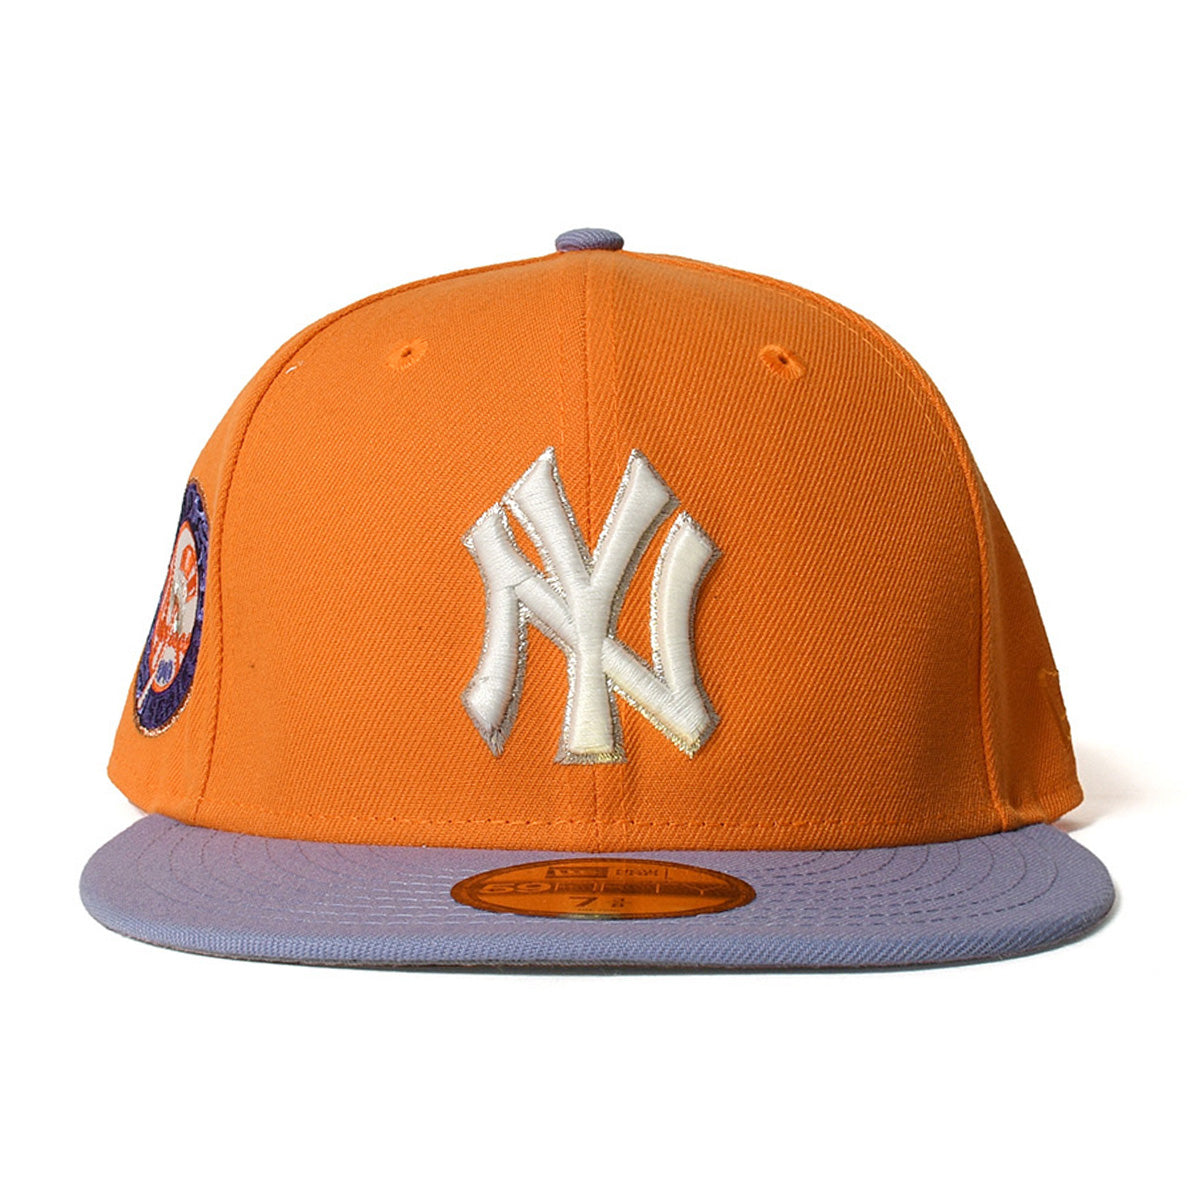 NEW ERA New York Yankees - 59FIFTY 1949 WS LIGHT ORANGE/LAVENDER